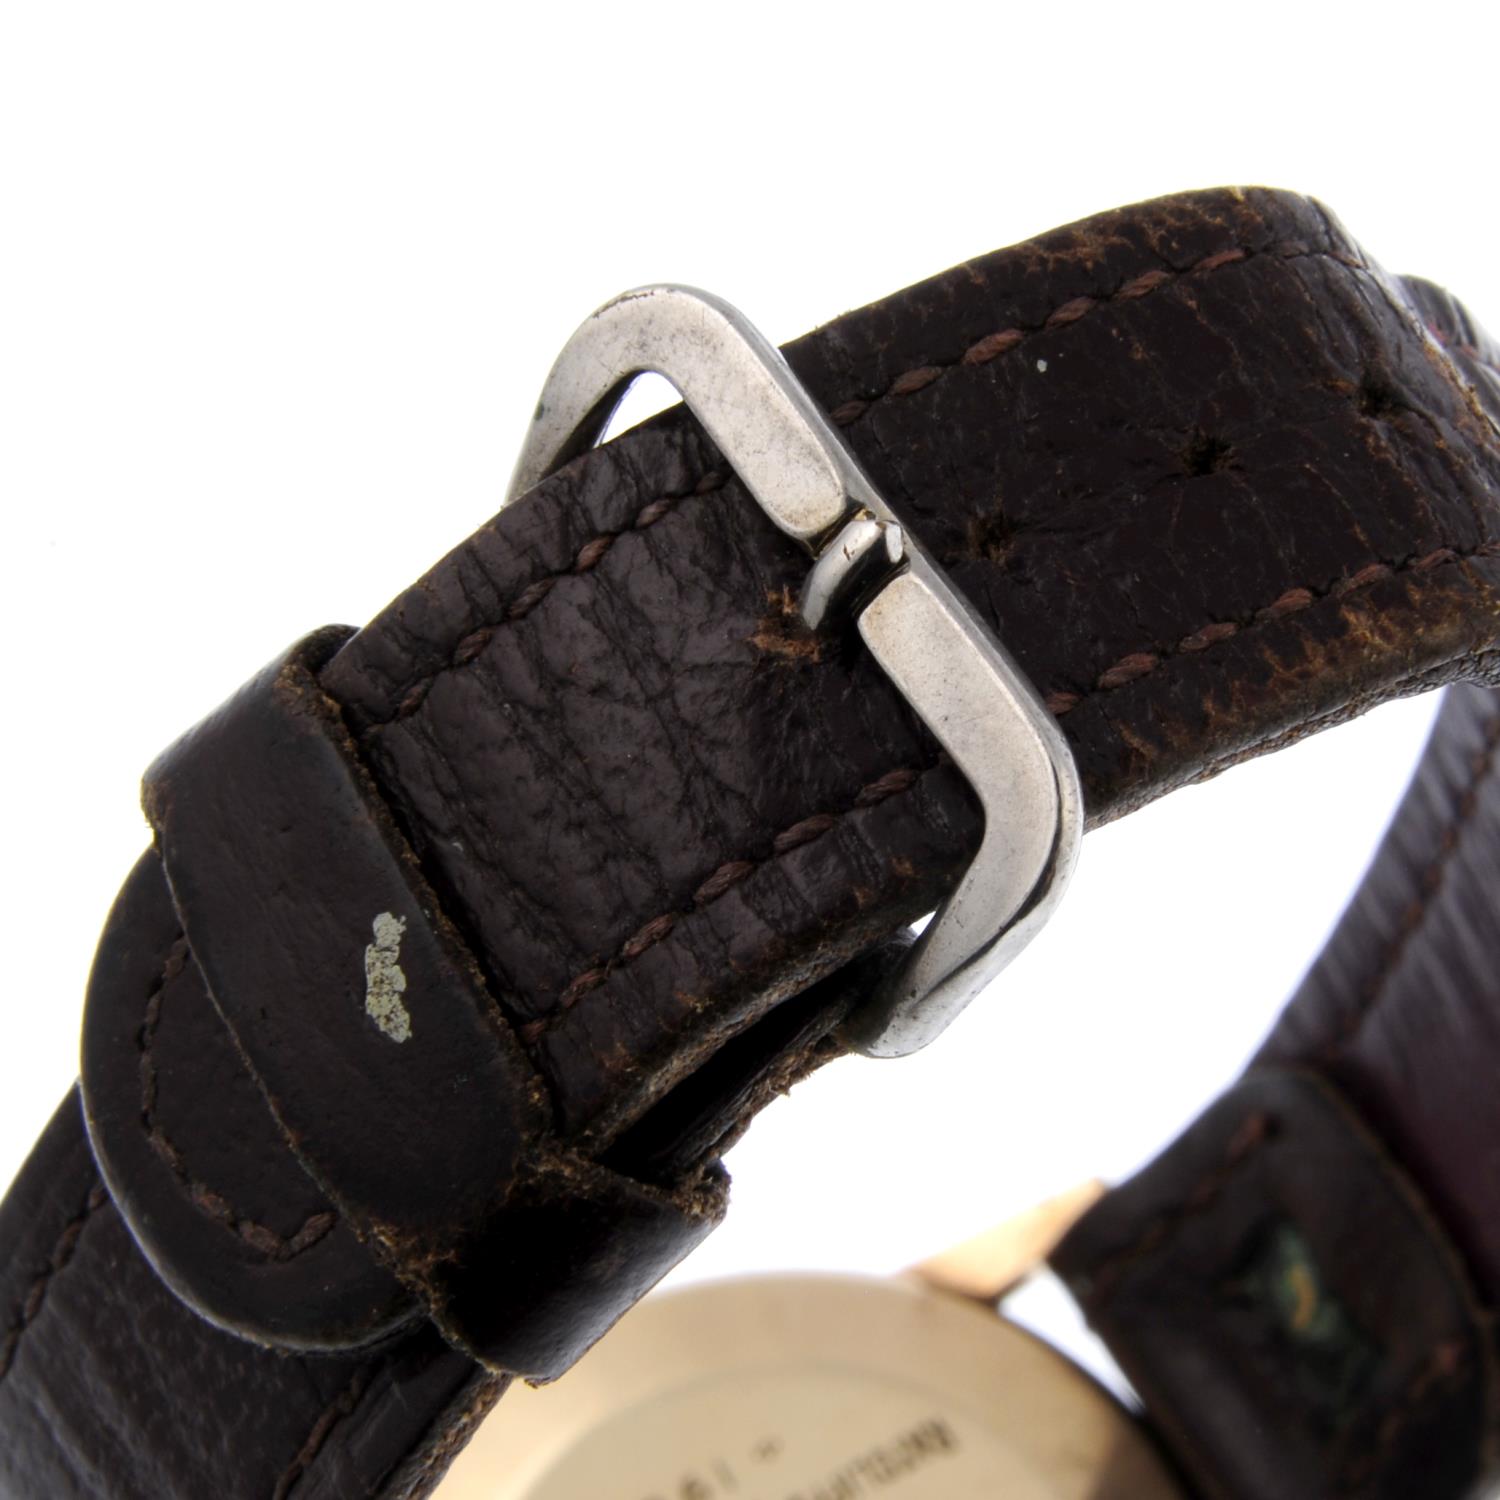 CYMA - a gentleman's wrist watch. - Image 2 of 4